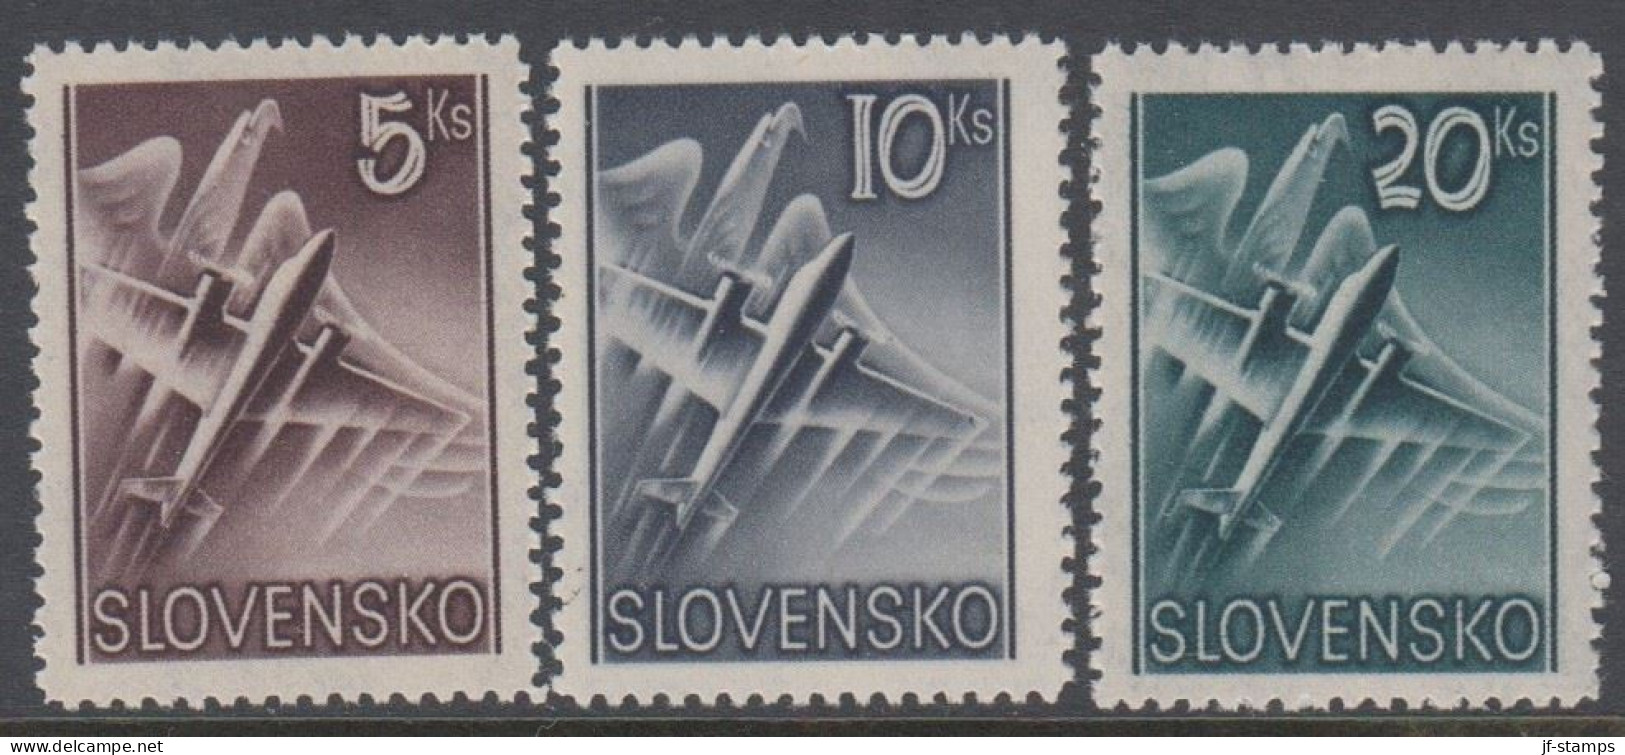 1940. SLOVENSKO Air Mail. Complete Set Of 3 Stamps. Never Hinged. (Michel 76-78) - JF418427 - Ongebruikt